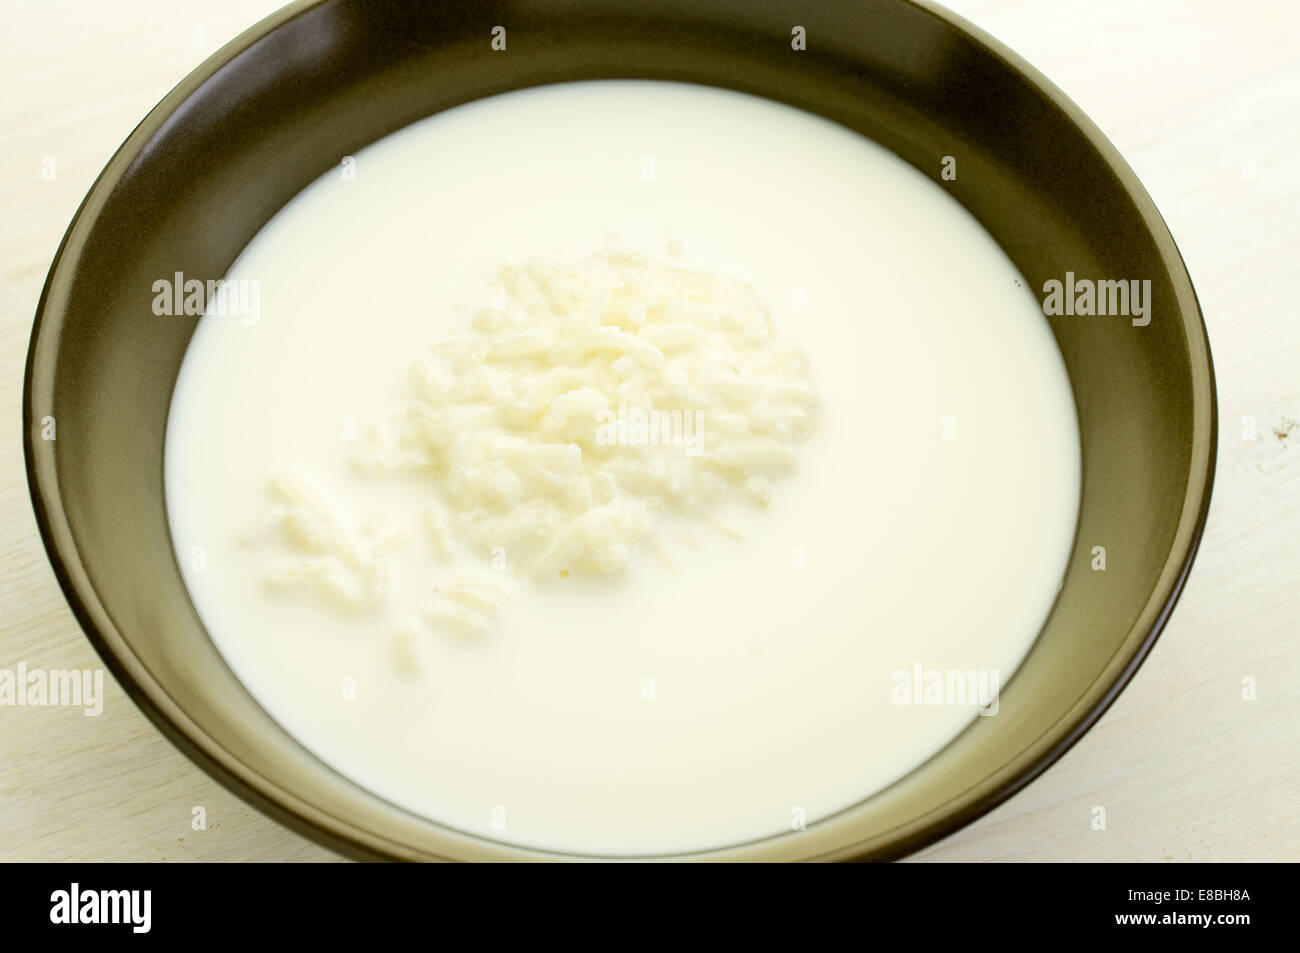 rice cereal in milk